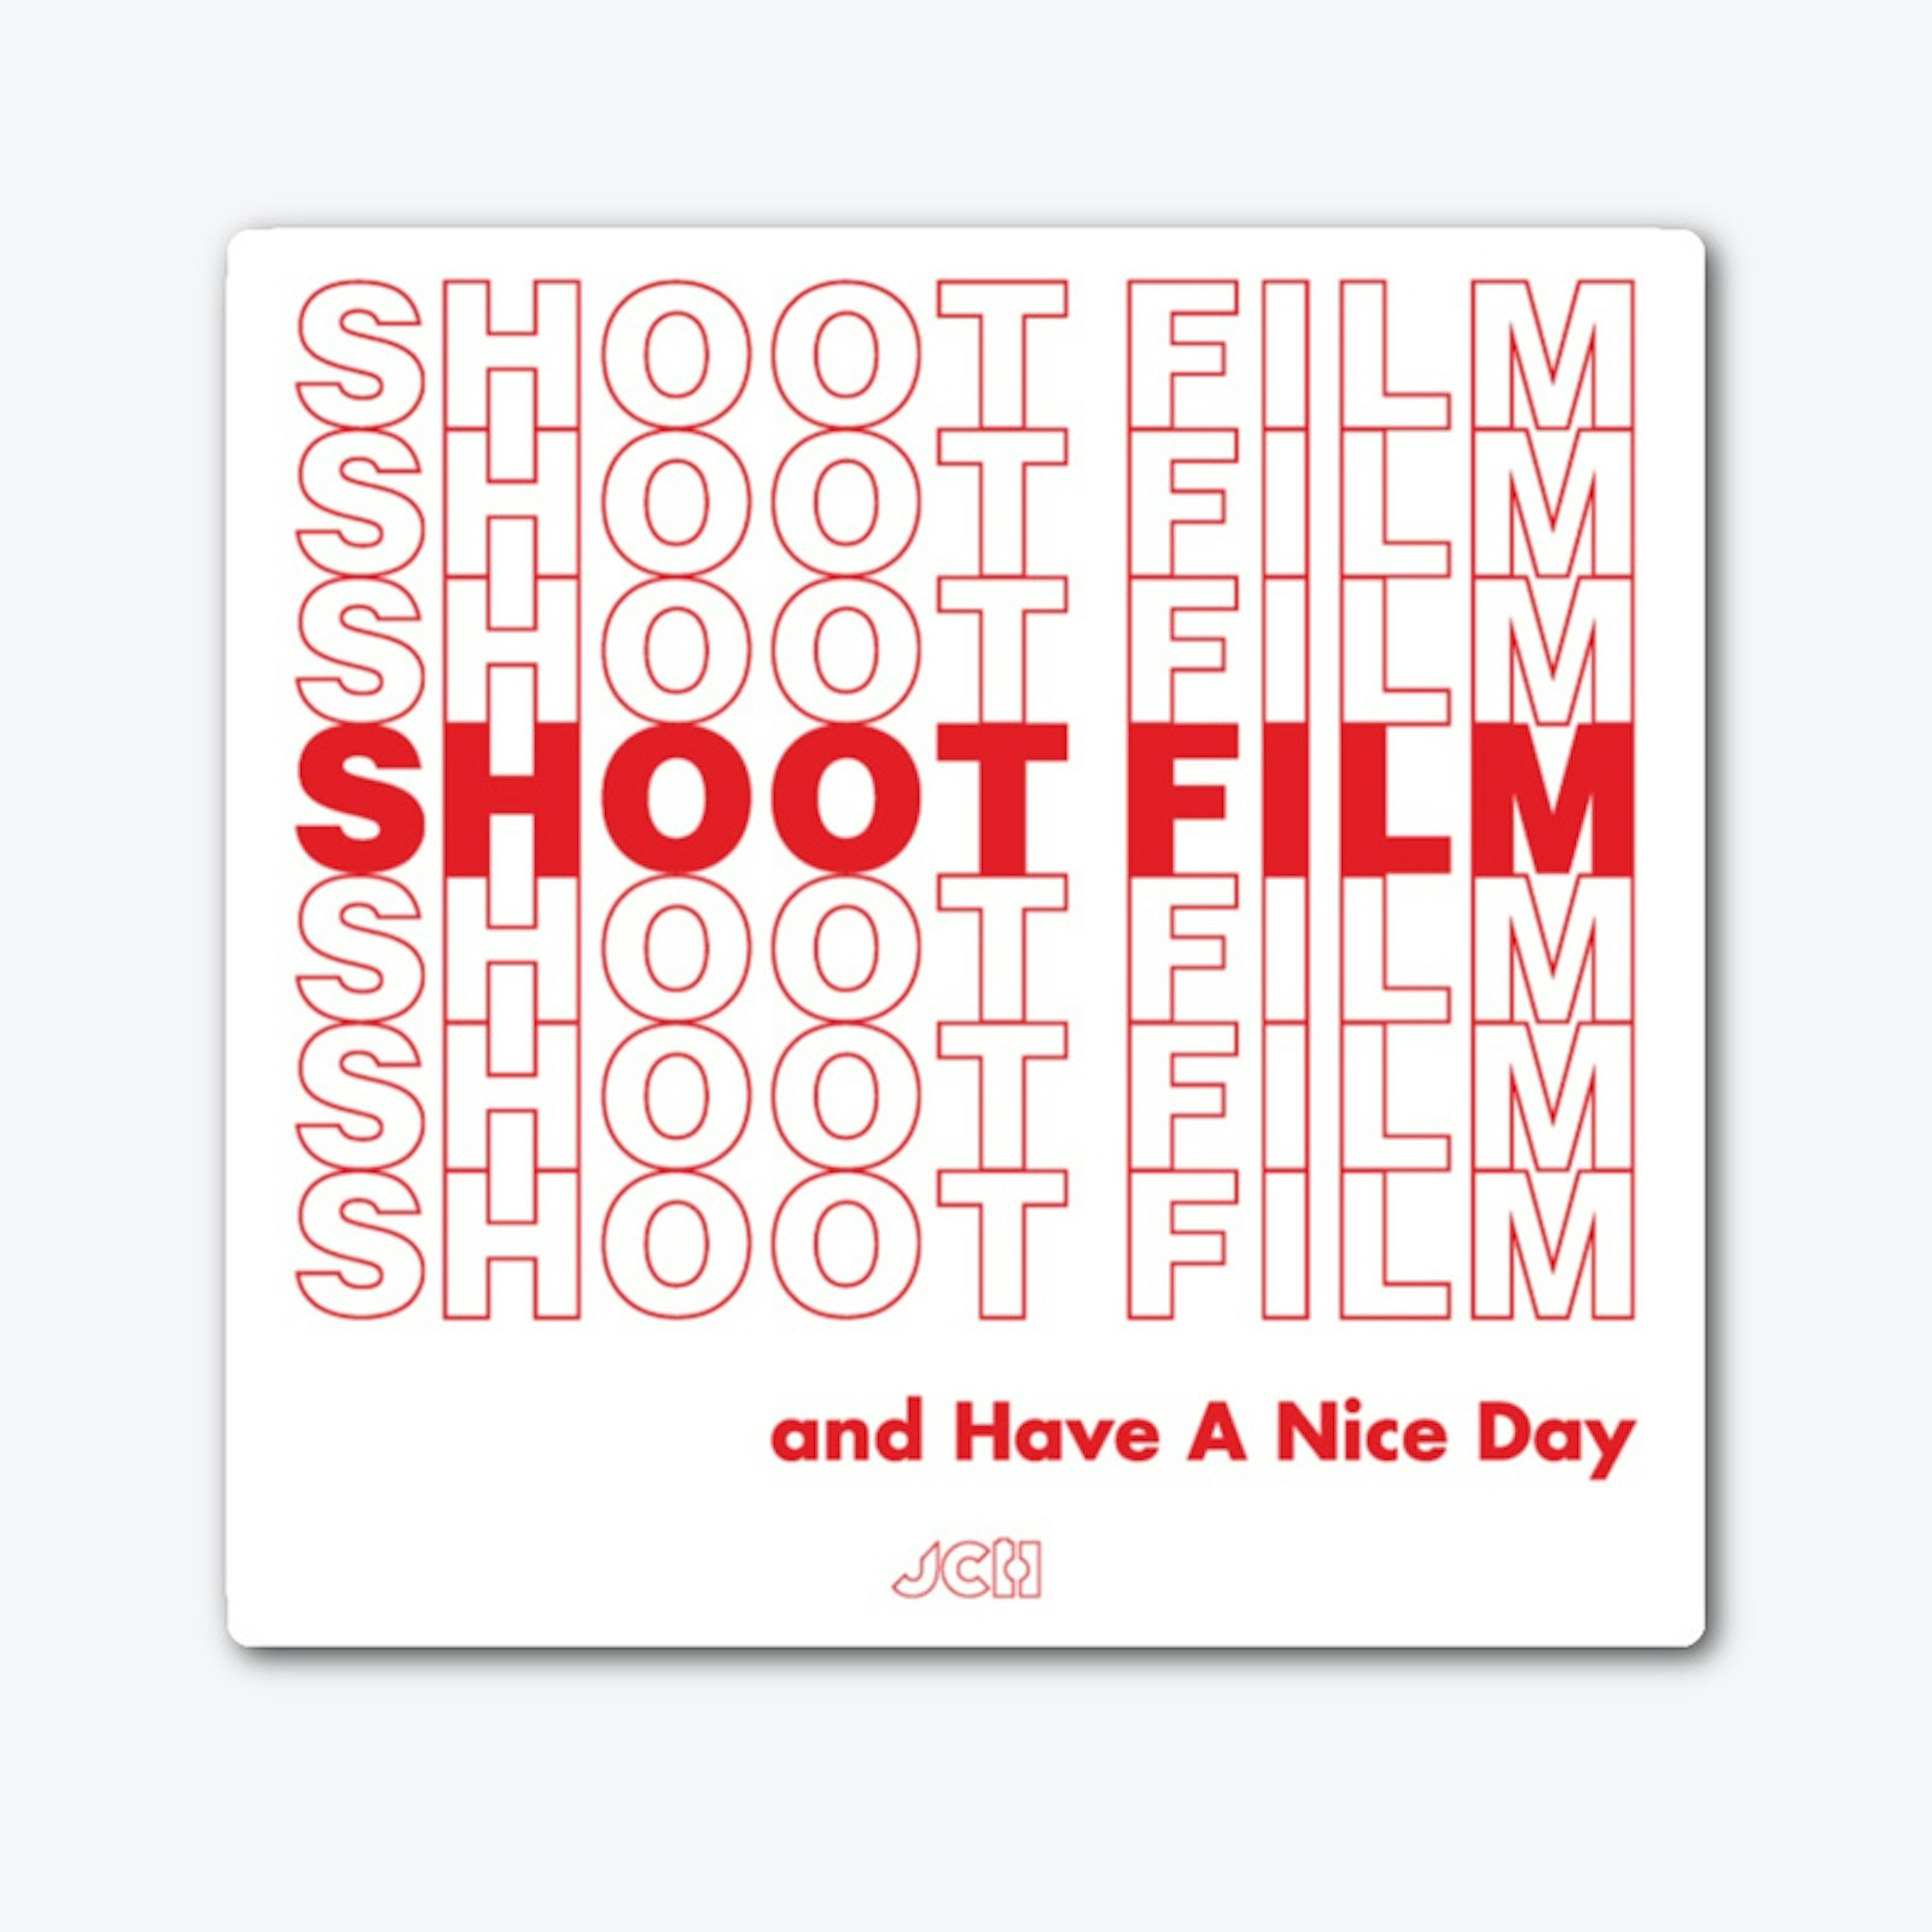 JCH Shoot Film Sticker